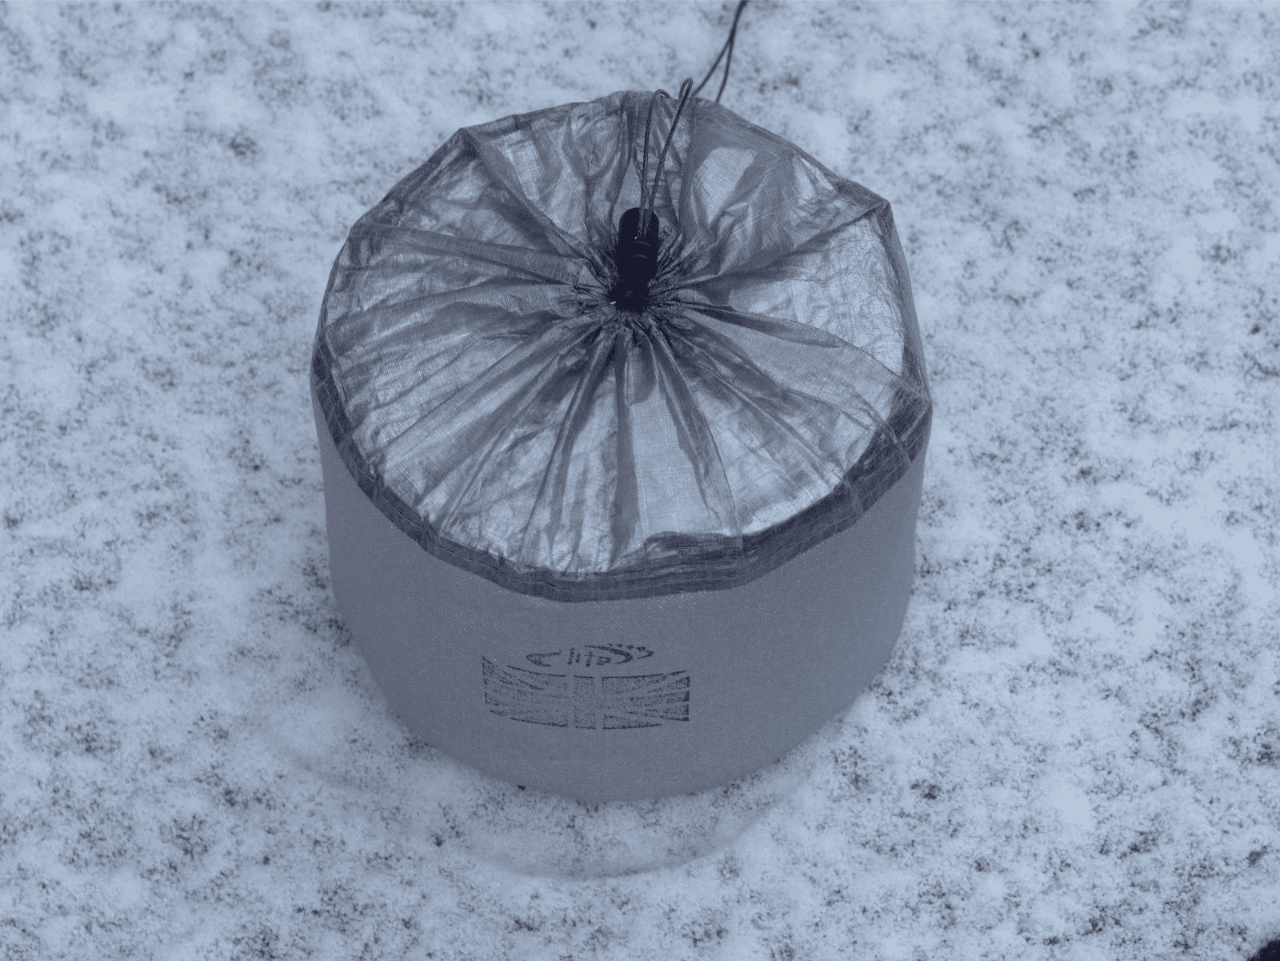 Cuben Fiber Insulated Metaflex Sack Pot MSR Titanium Kettle 25g